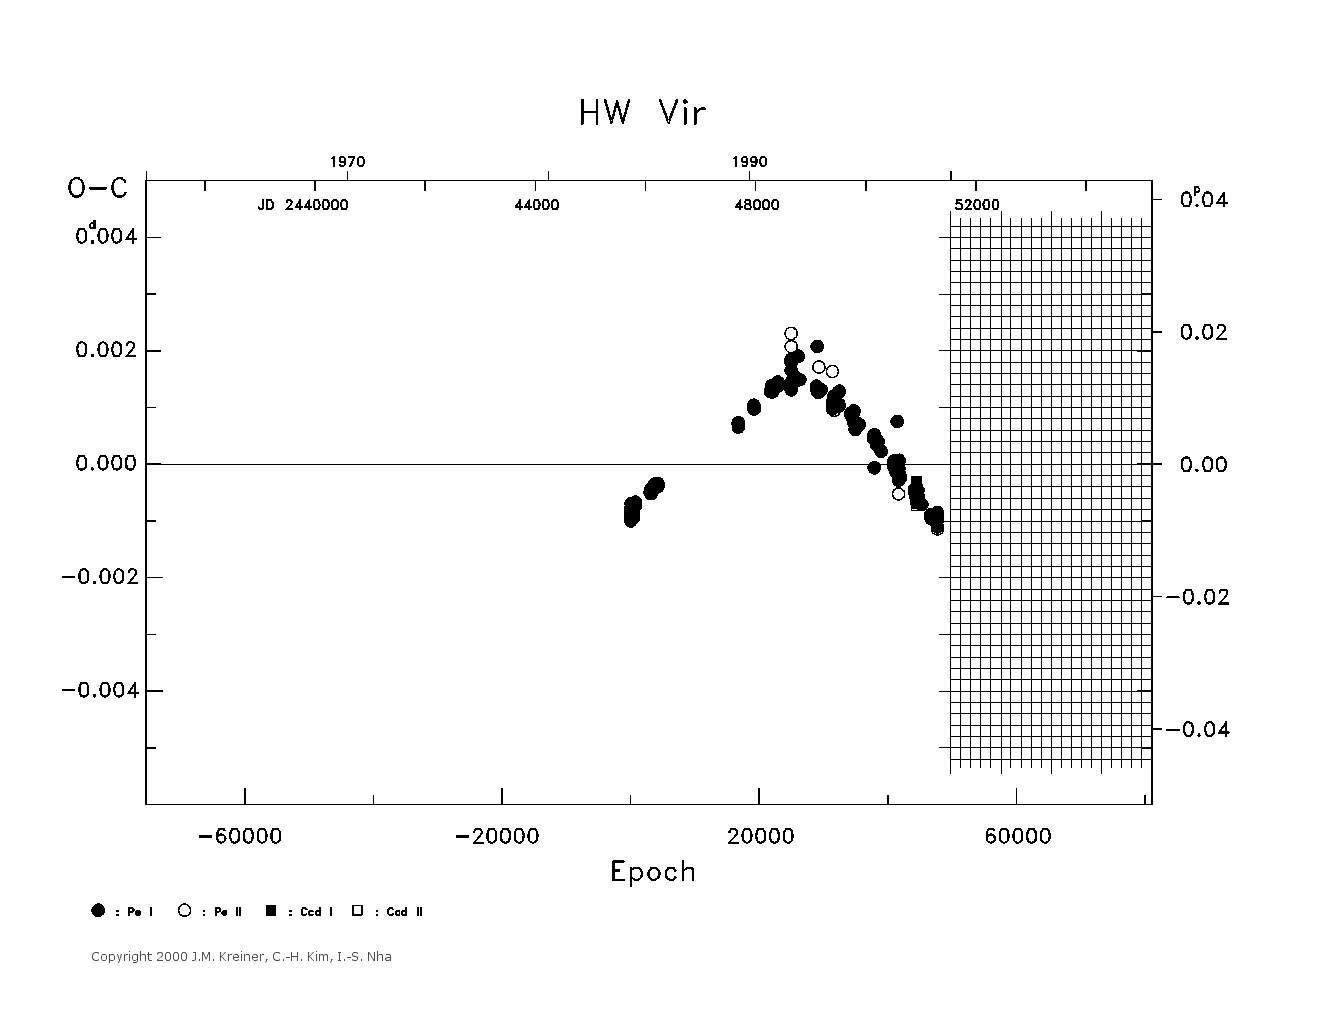 [IMAGE: large HW VIR O-C diagram]